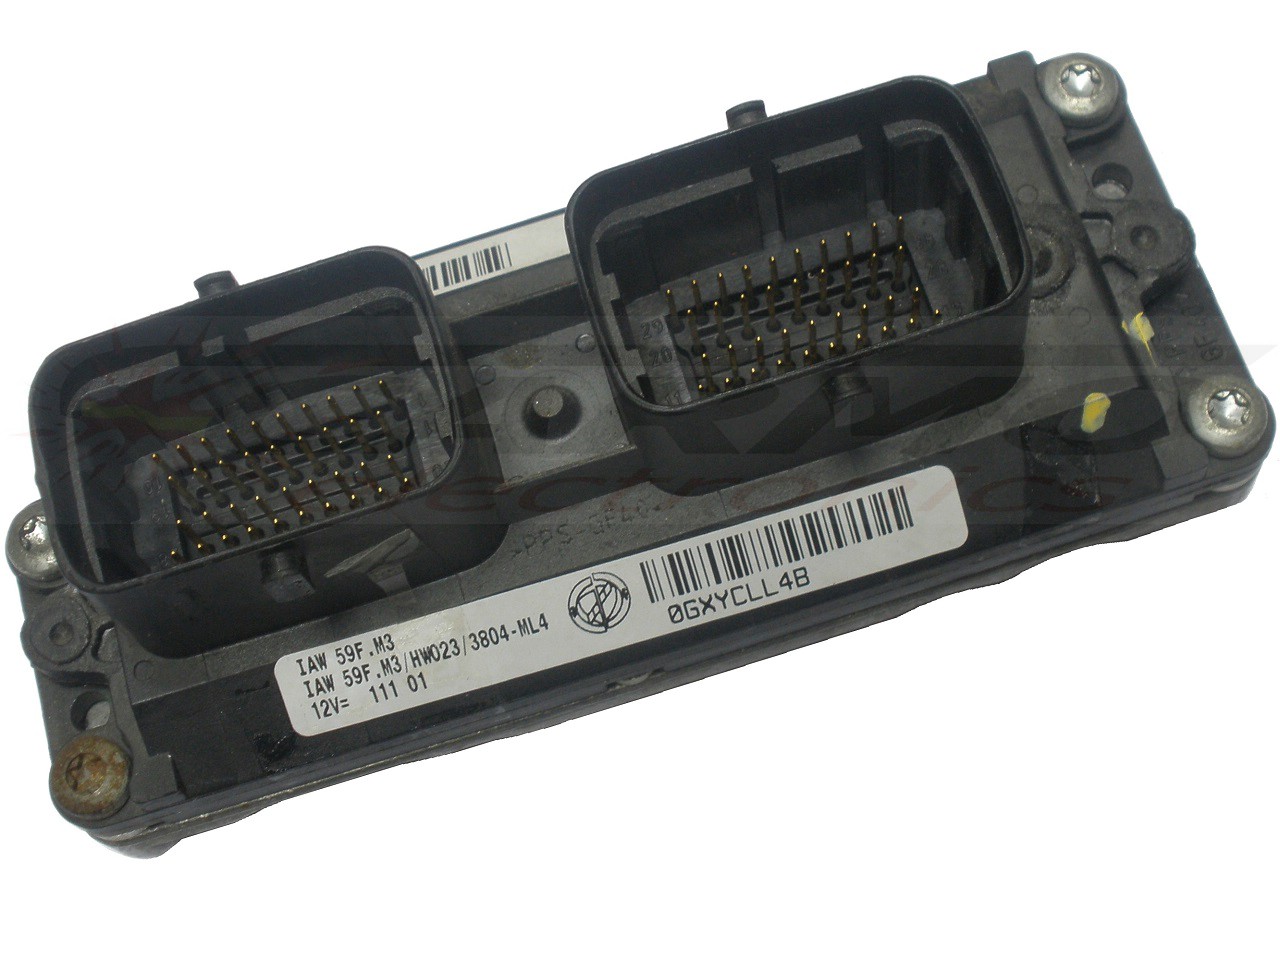 Fiat Punto 1.2 8v ECU ECM CDI black box computer brain (IAW59F.M3, IAW 59F.M3)